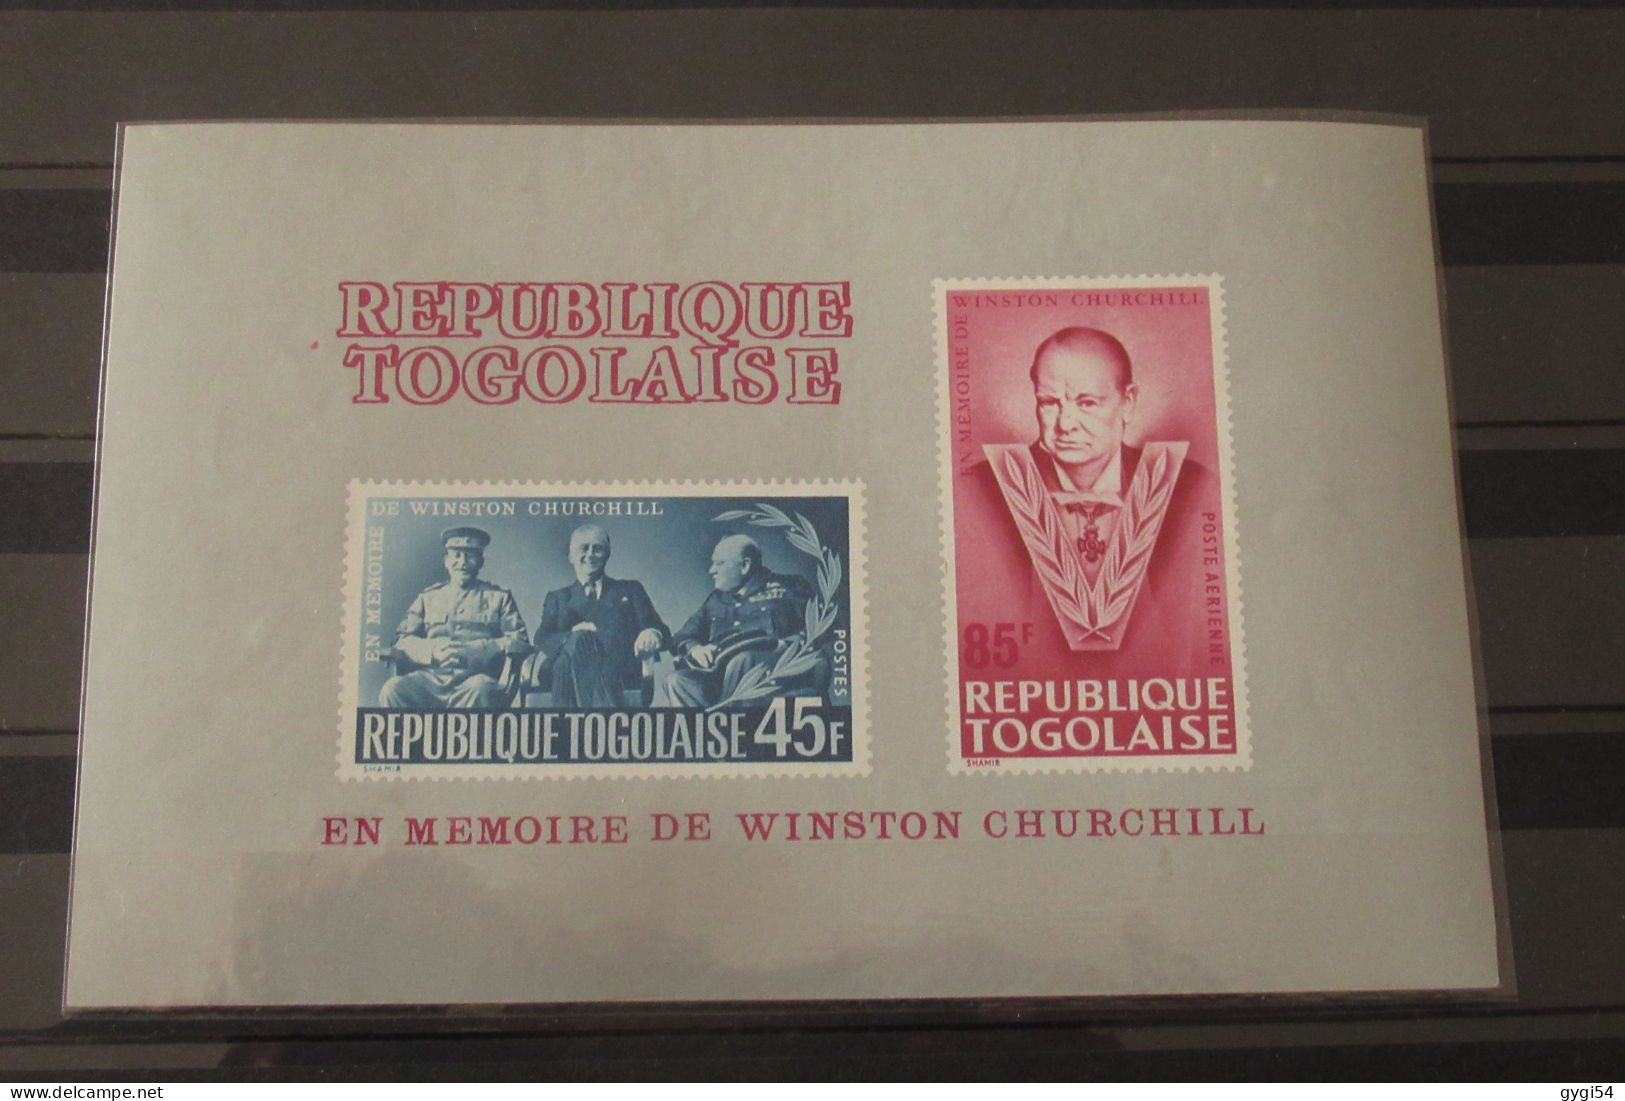 Winston Churchill  BF - 1965 - N° 17**MNH - Sir Winston Churchill